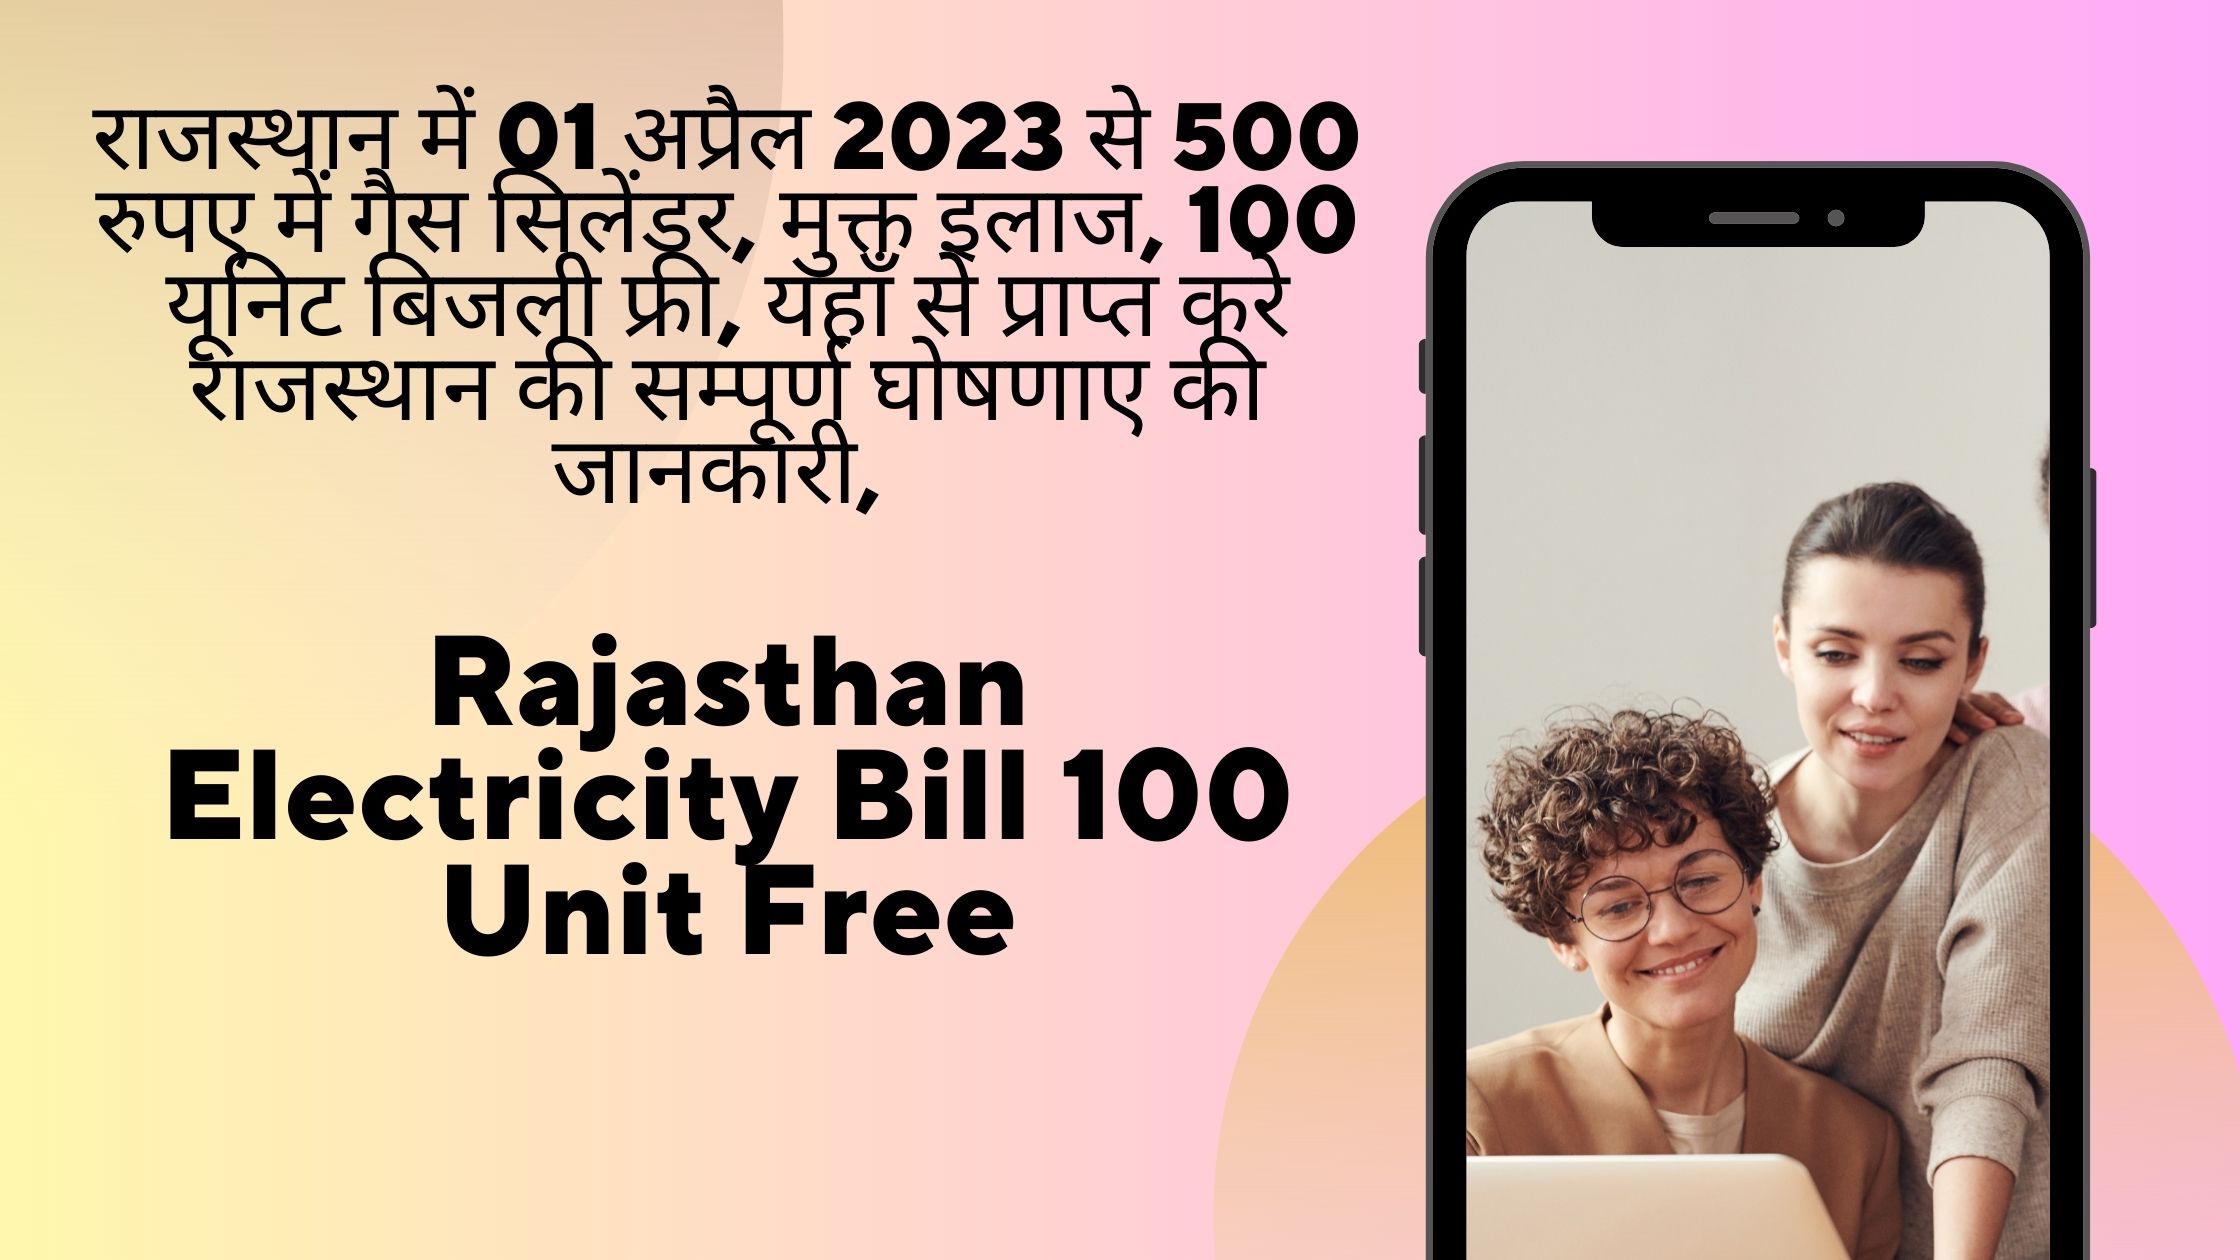 Rajasthan Electricity Bill 100 Unit Free